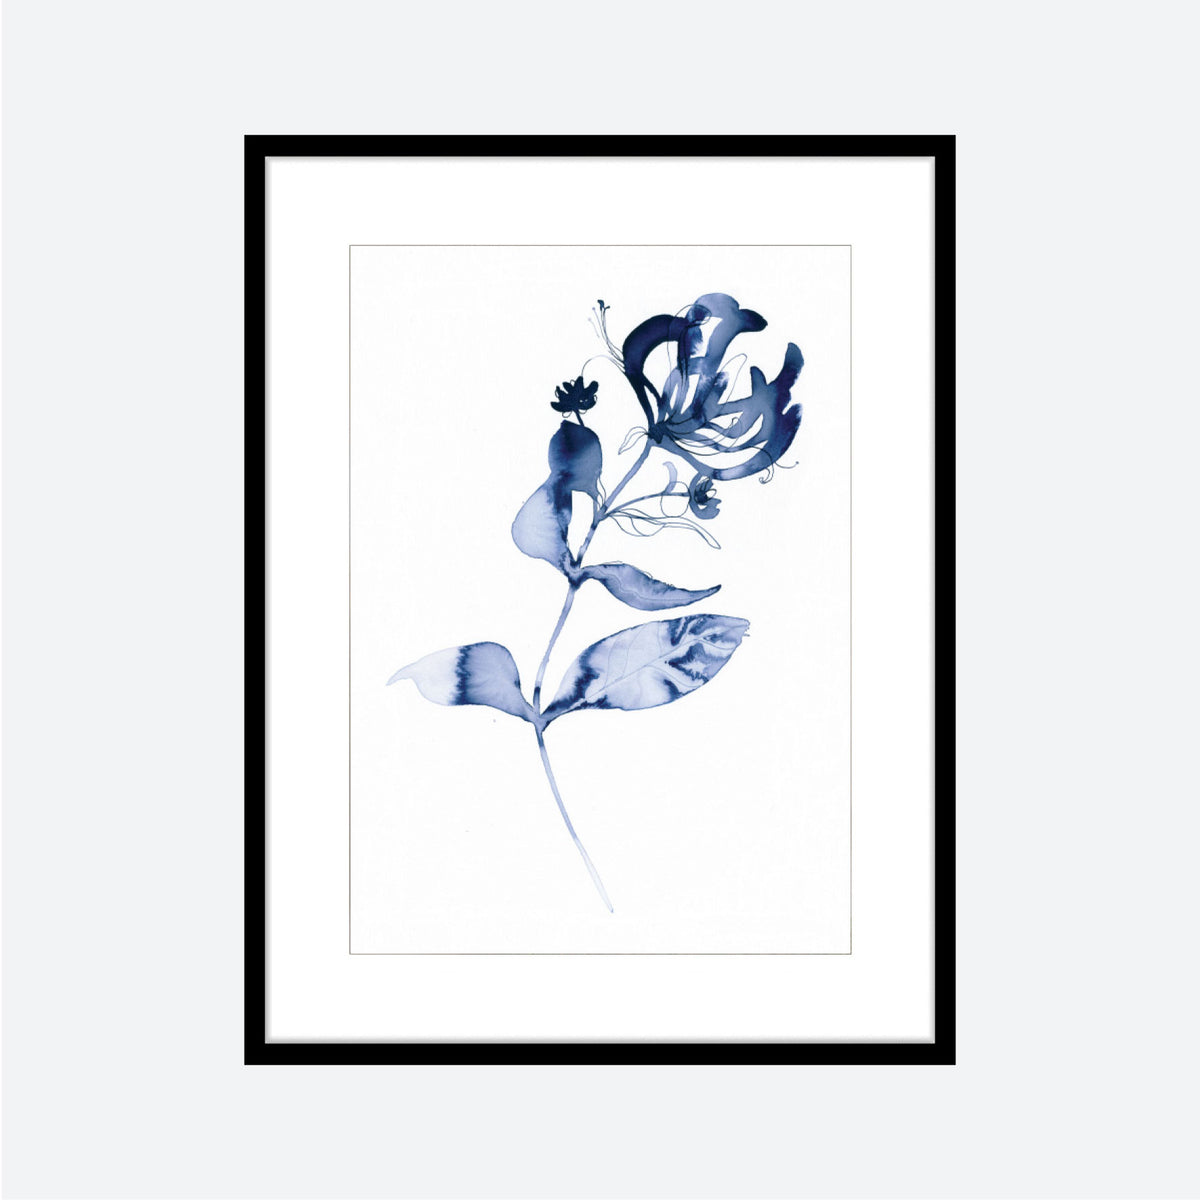 Toril Baekmark - Fine Art Prints - Flower Poster No.67